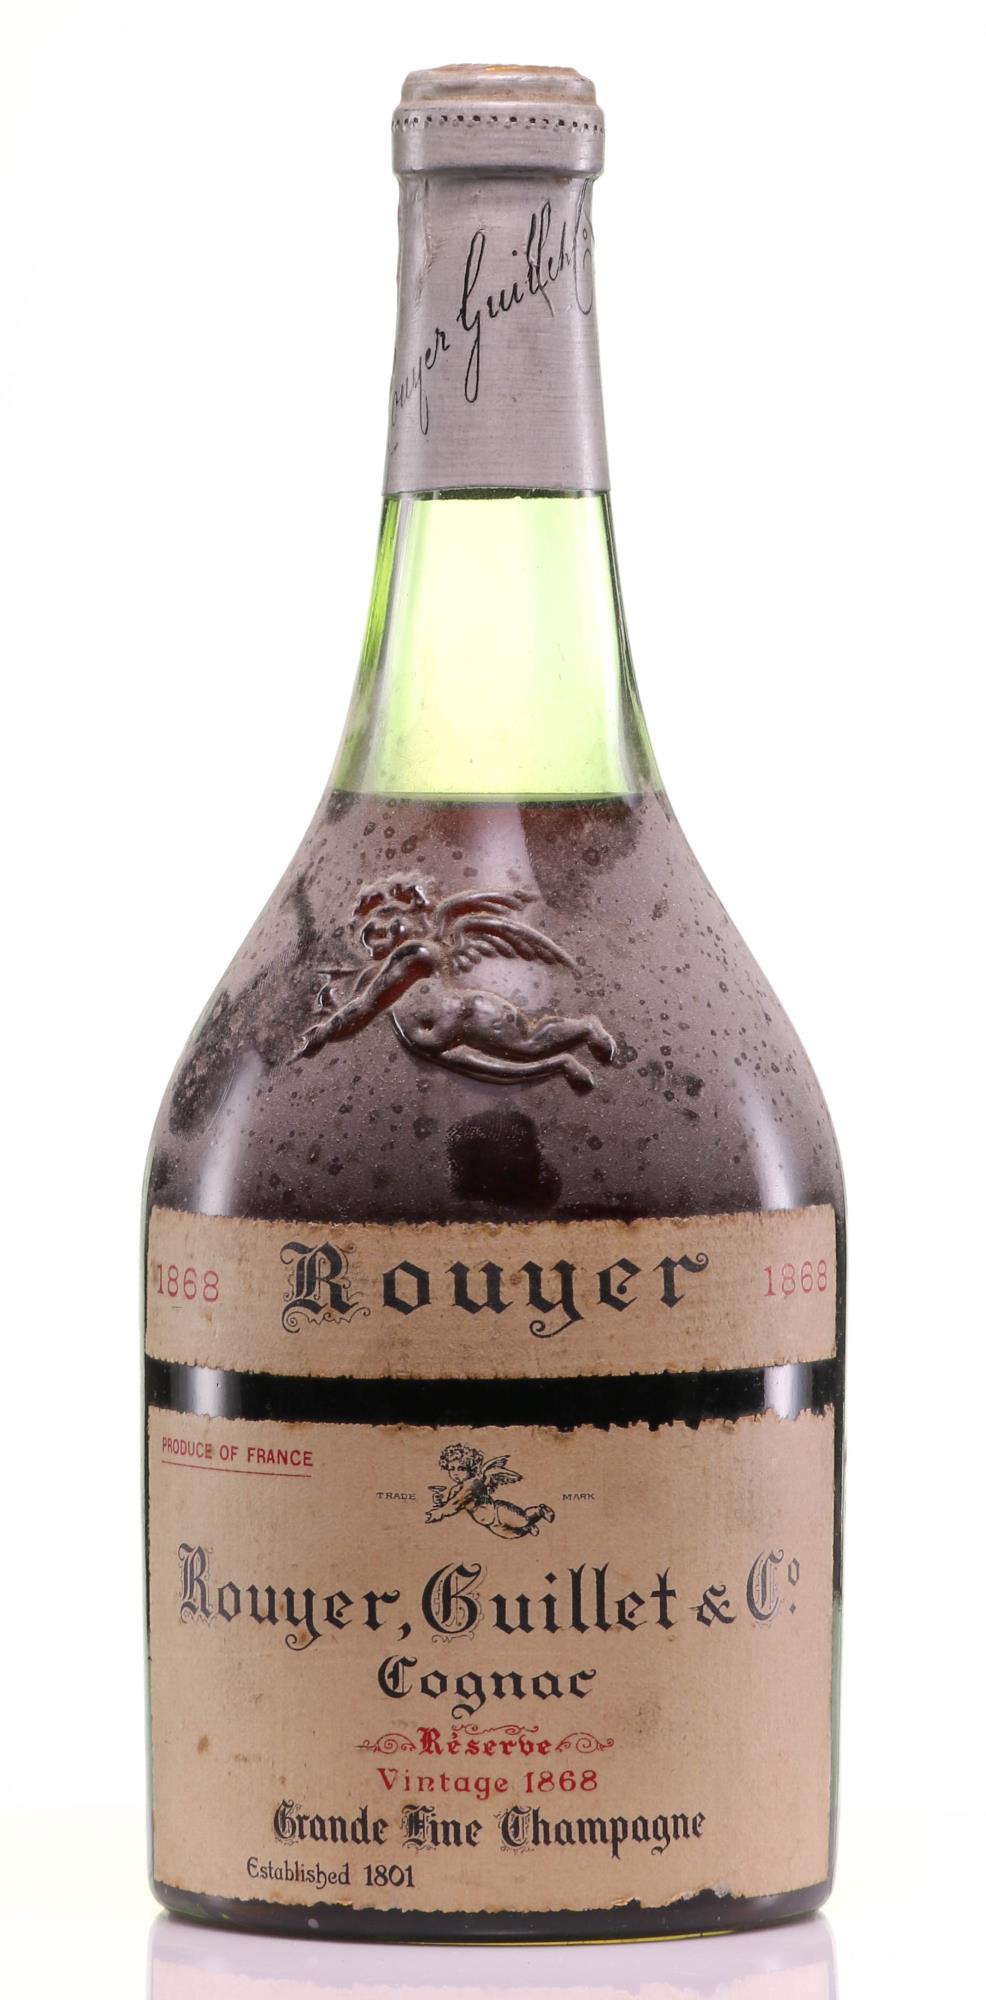 Rouyer Guillet & Co 1868 Cognac (Grande Fine Champagne Grapes) - Rue Pinard